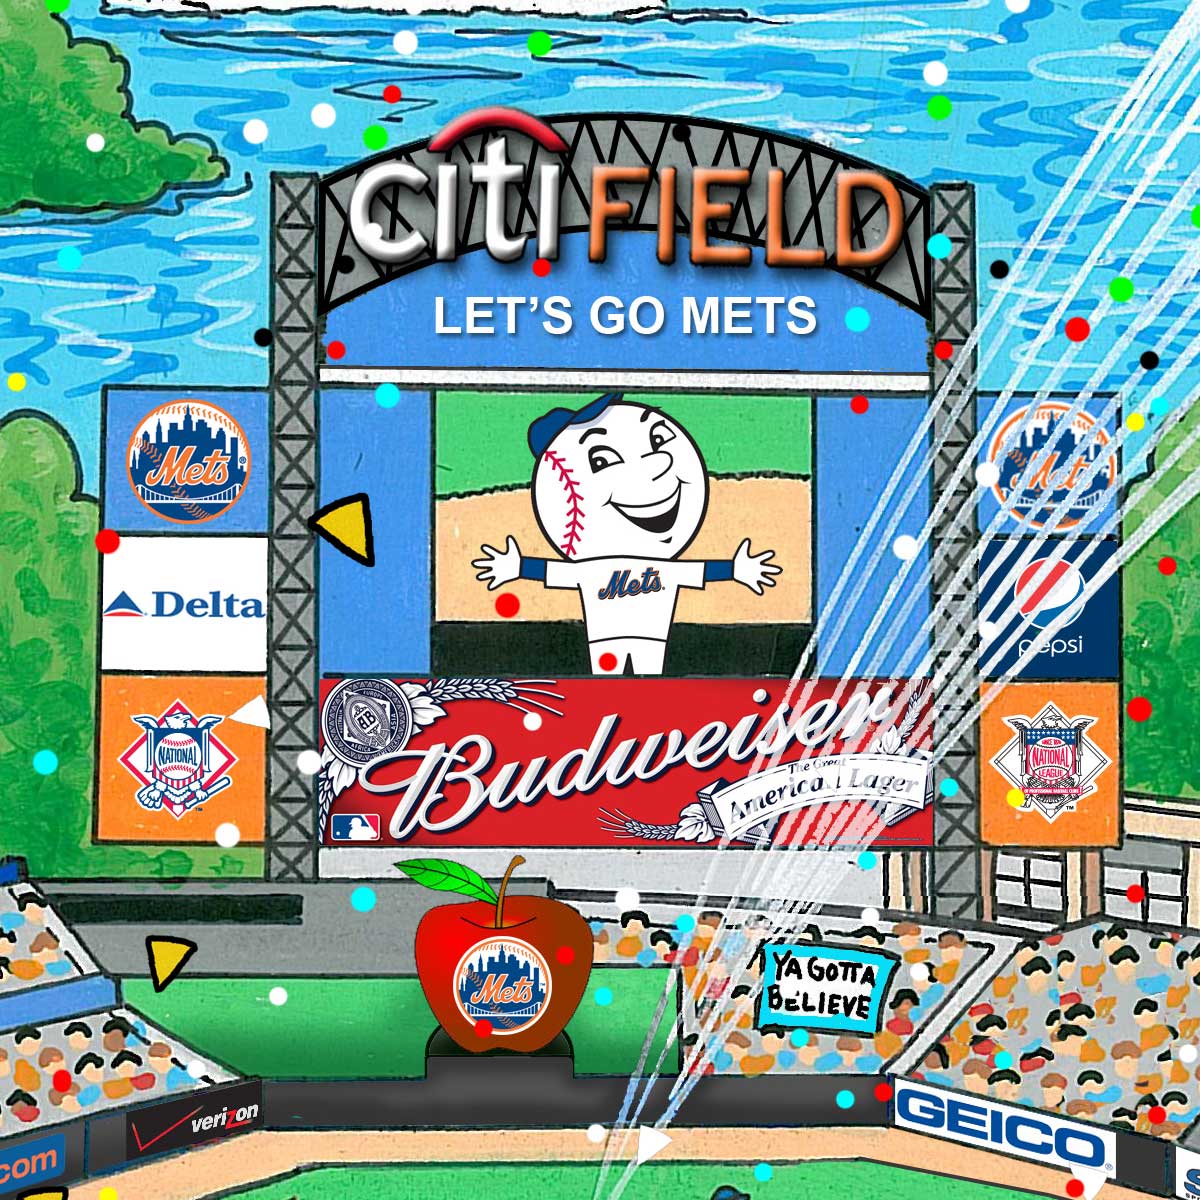 Citifield: The New Home of the Amazin' Mets | Fazzino